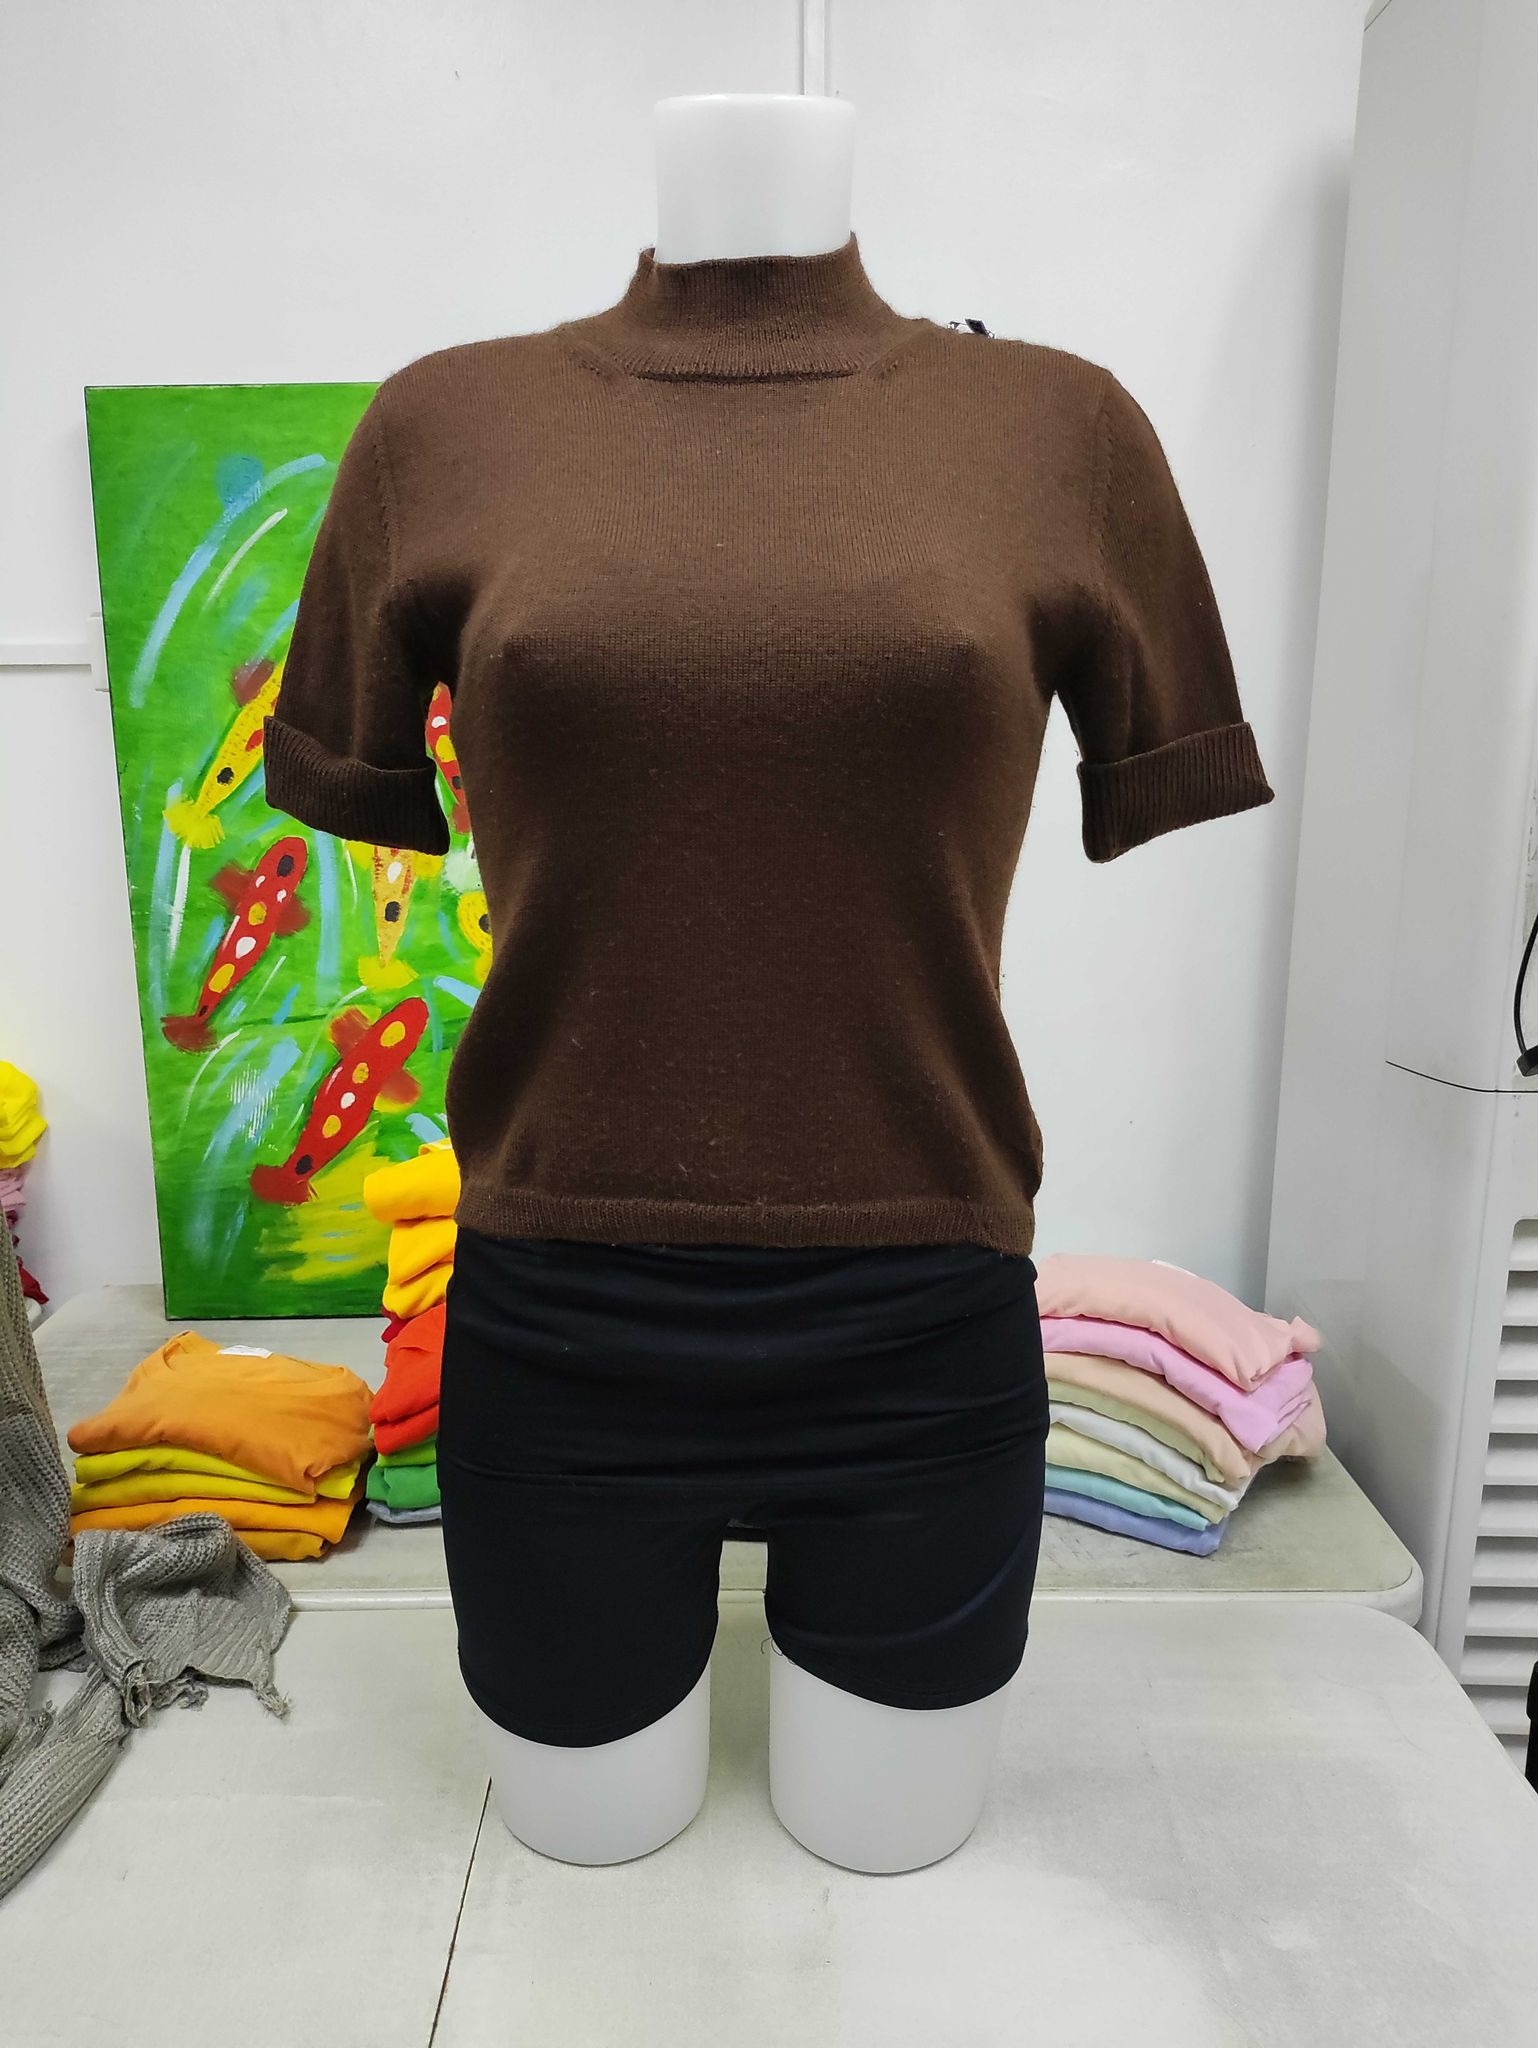 Preloved Brown Turtleneck Sweater